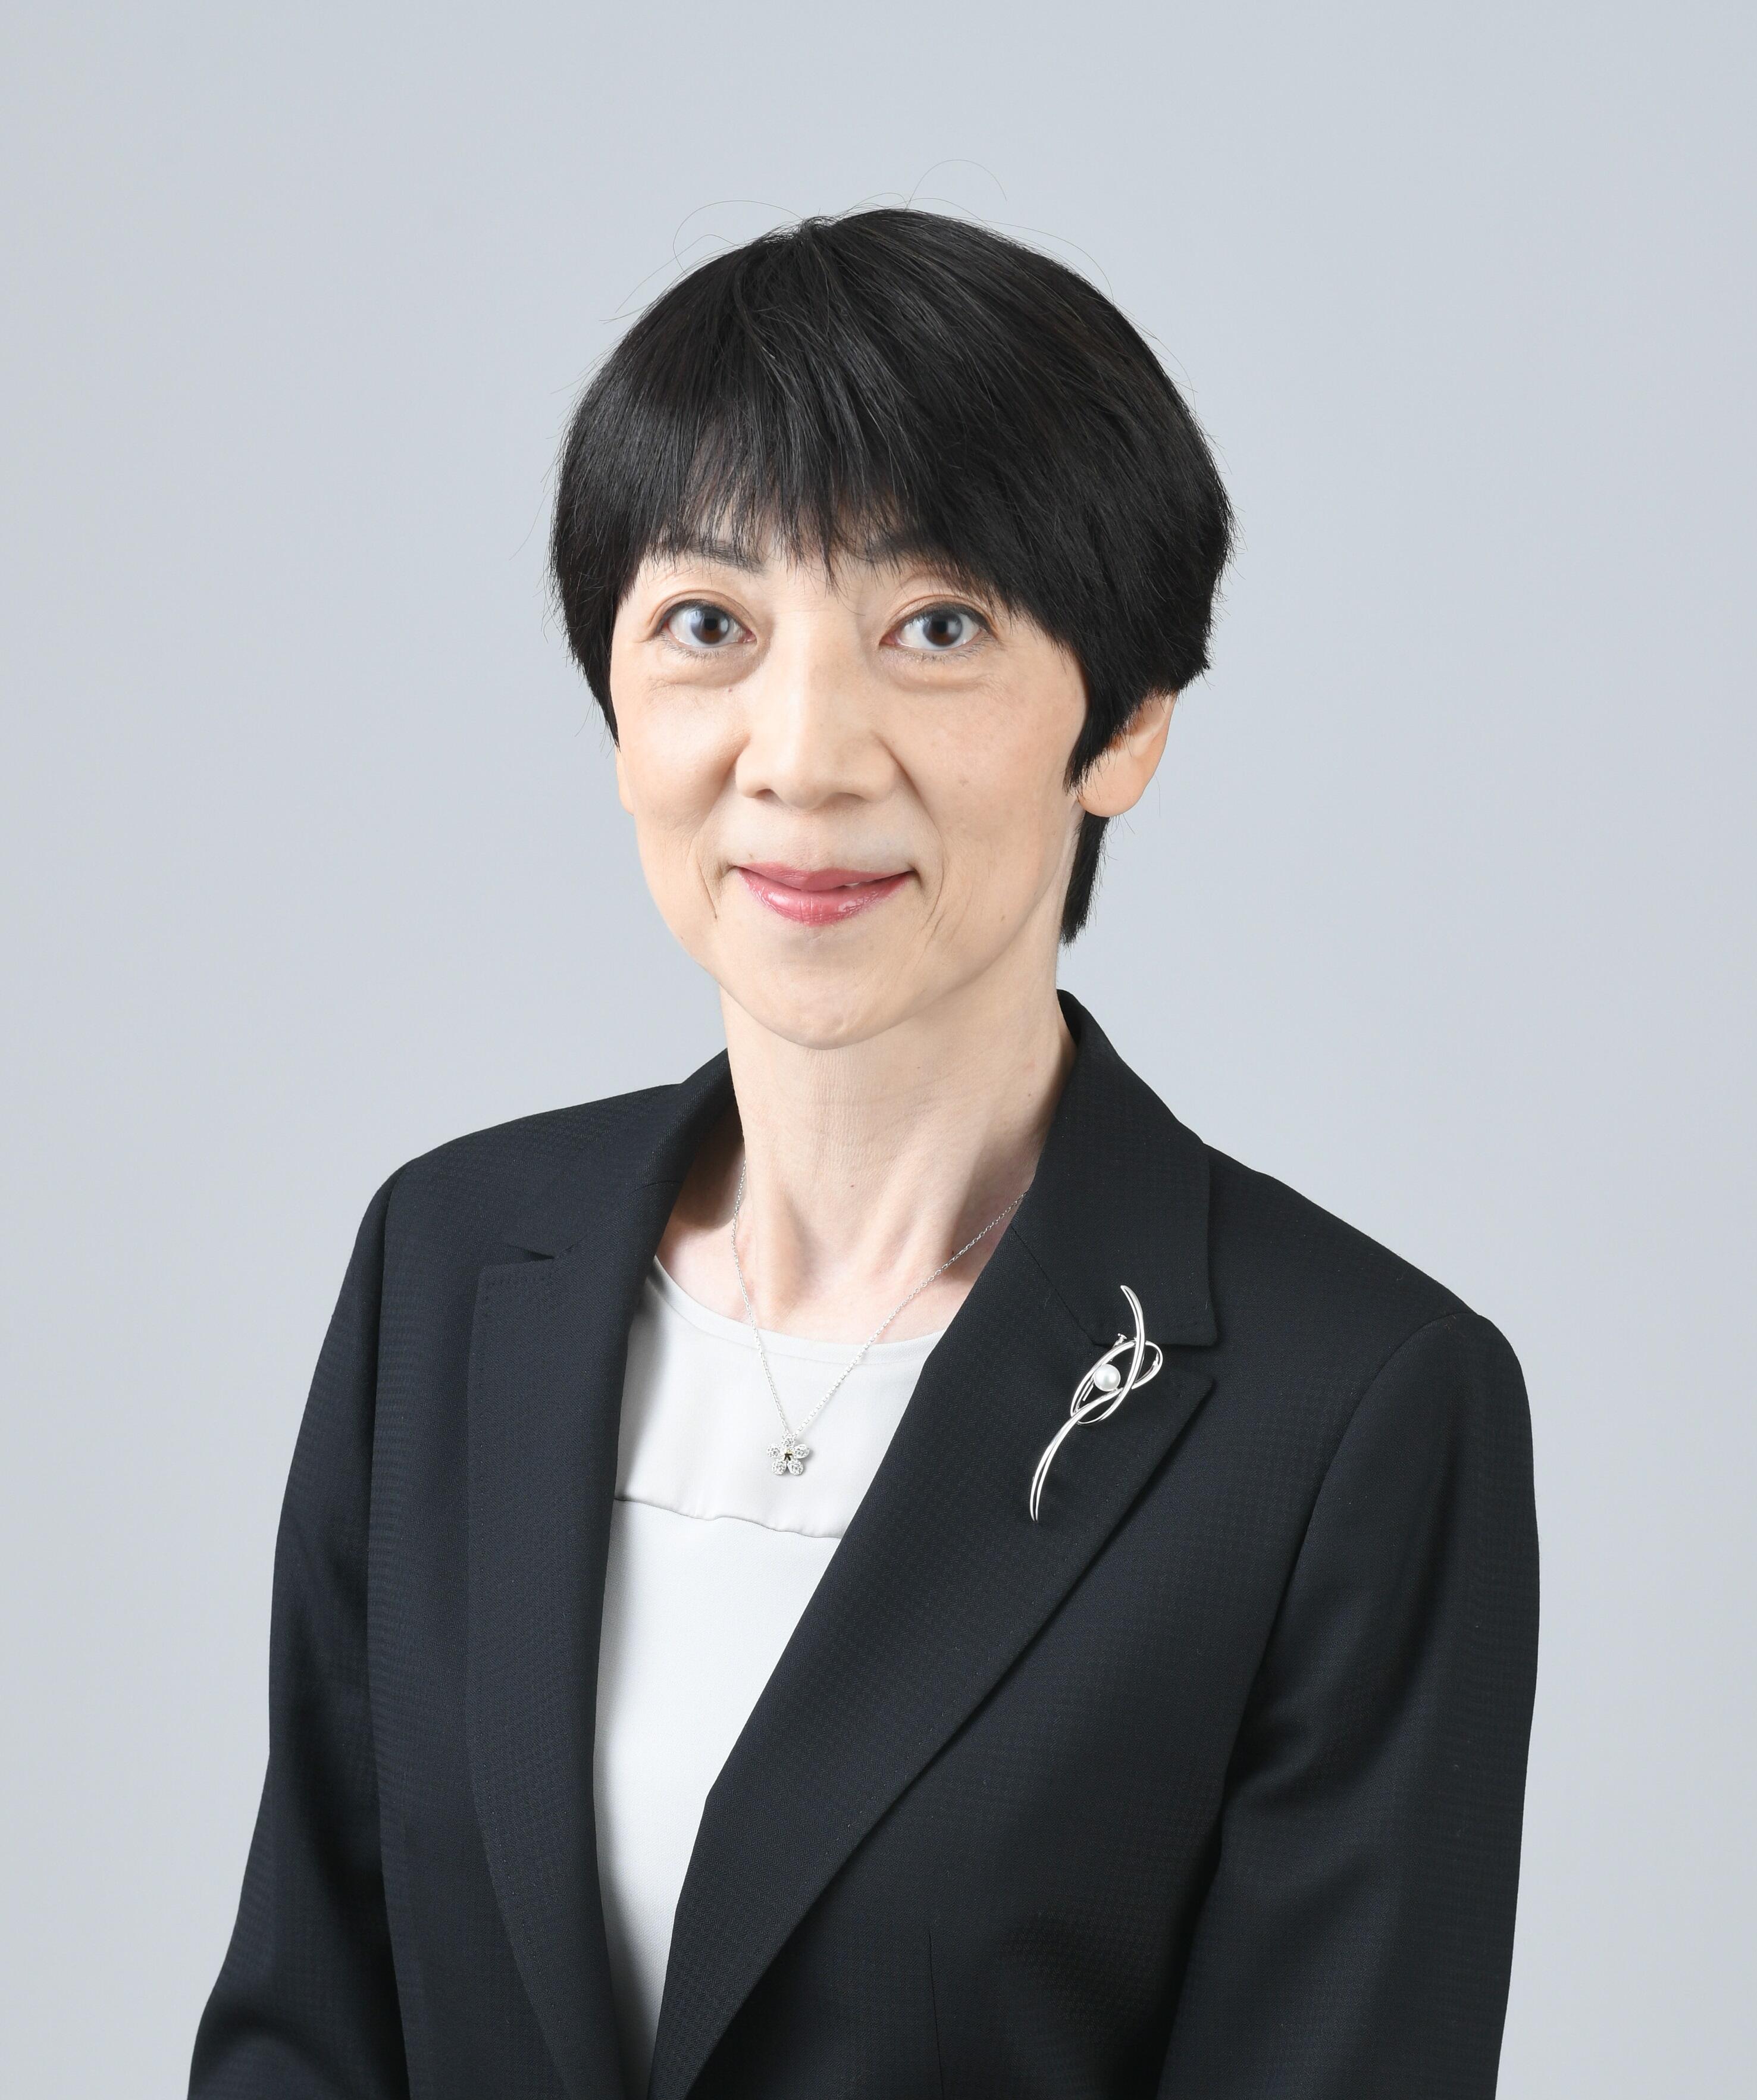 Kaori Yagasaki, Head of the Nursing Major for the Graduate School of Health Management